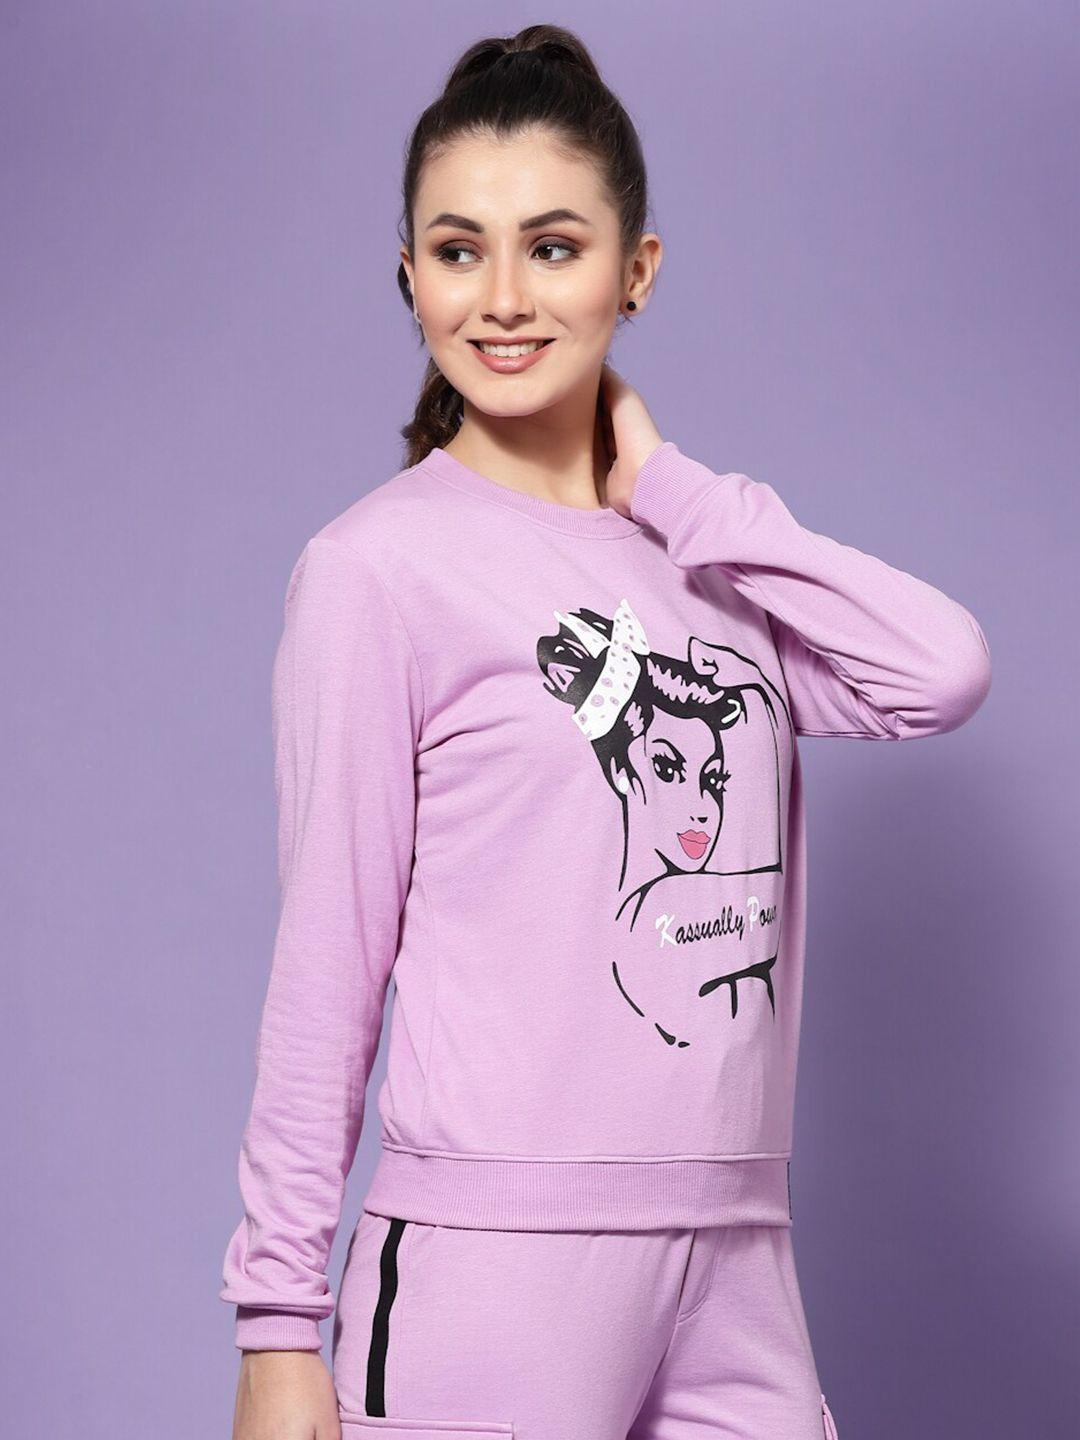 kassually women printed sweatshirt